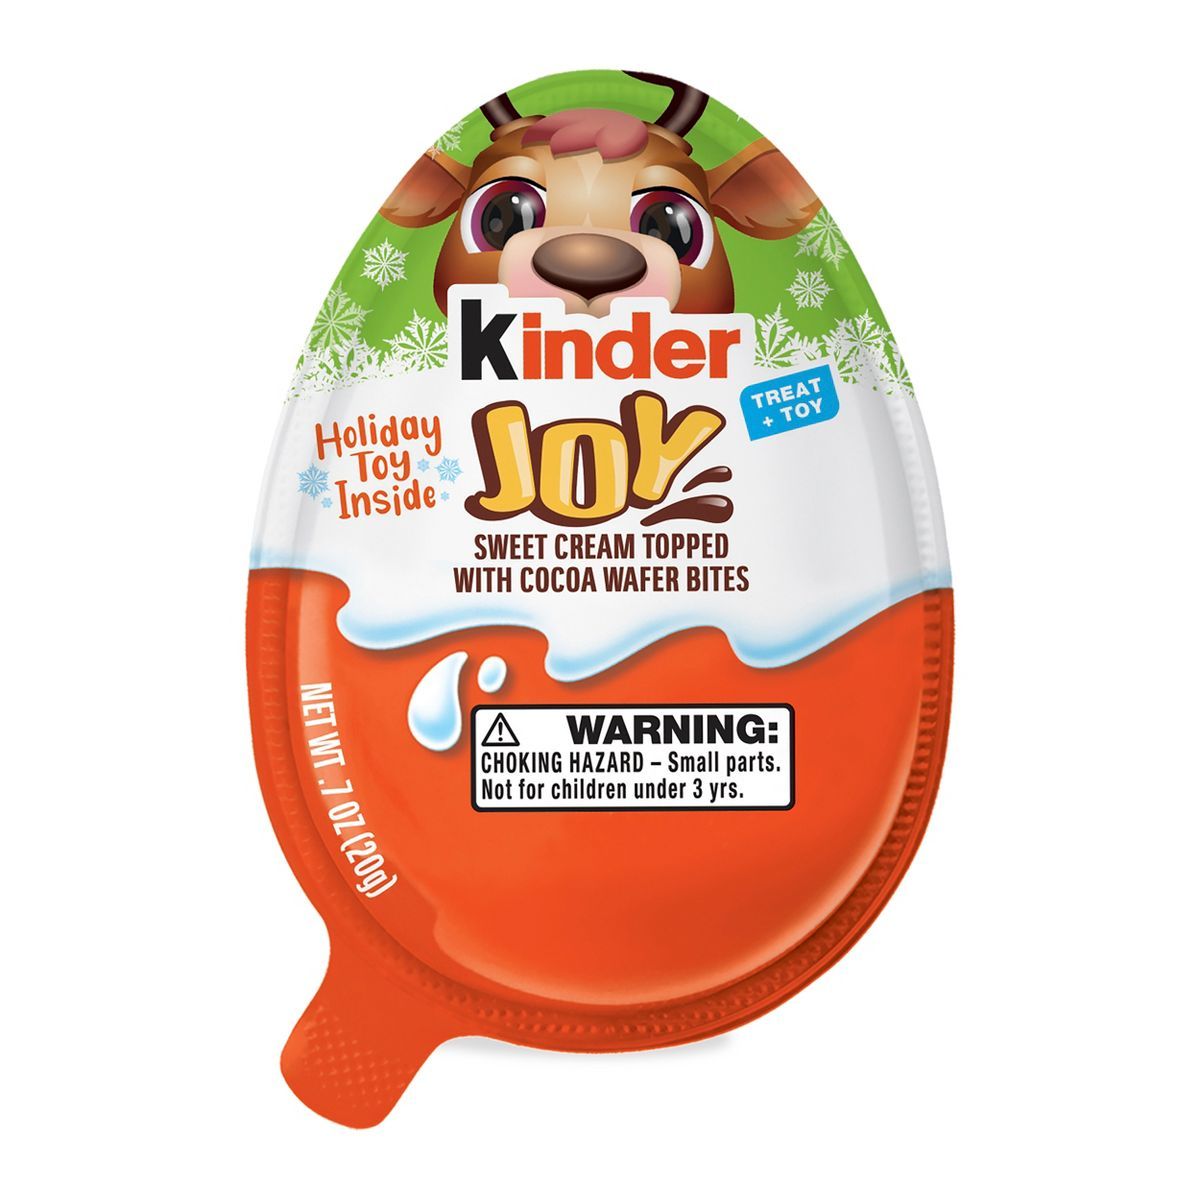 Kinder Joy Holiday Chocolate Egg (Colors May Vary) - 0.7oz | Target